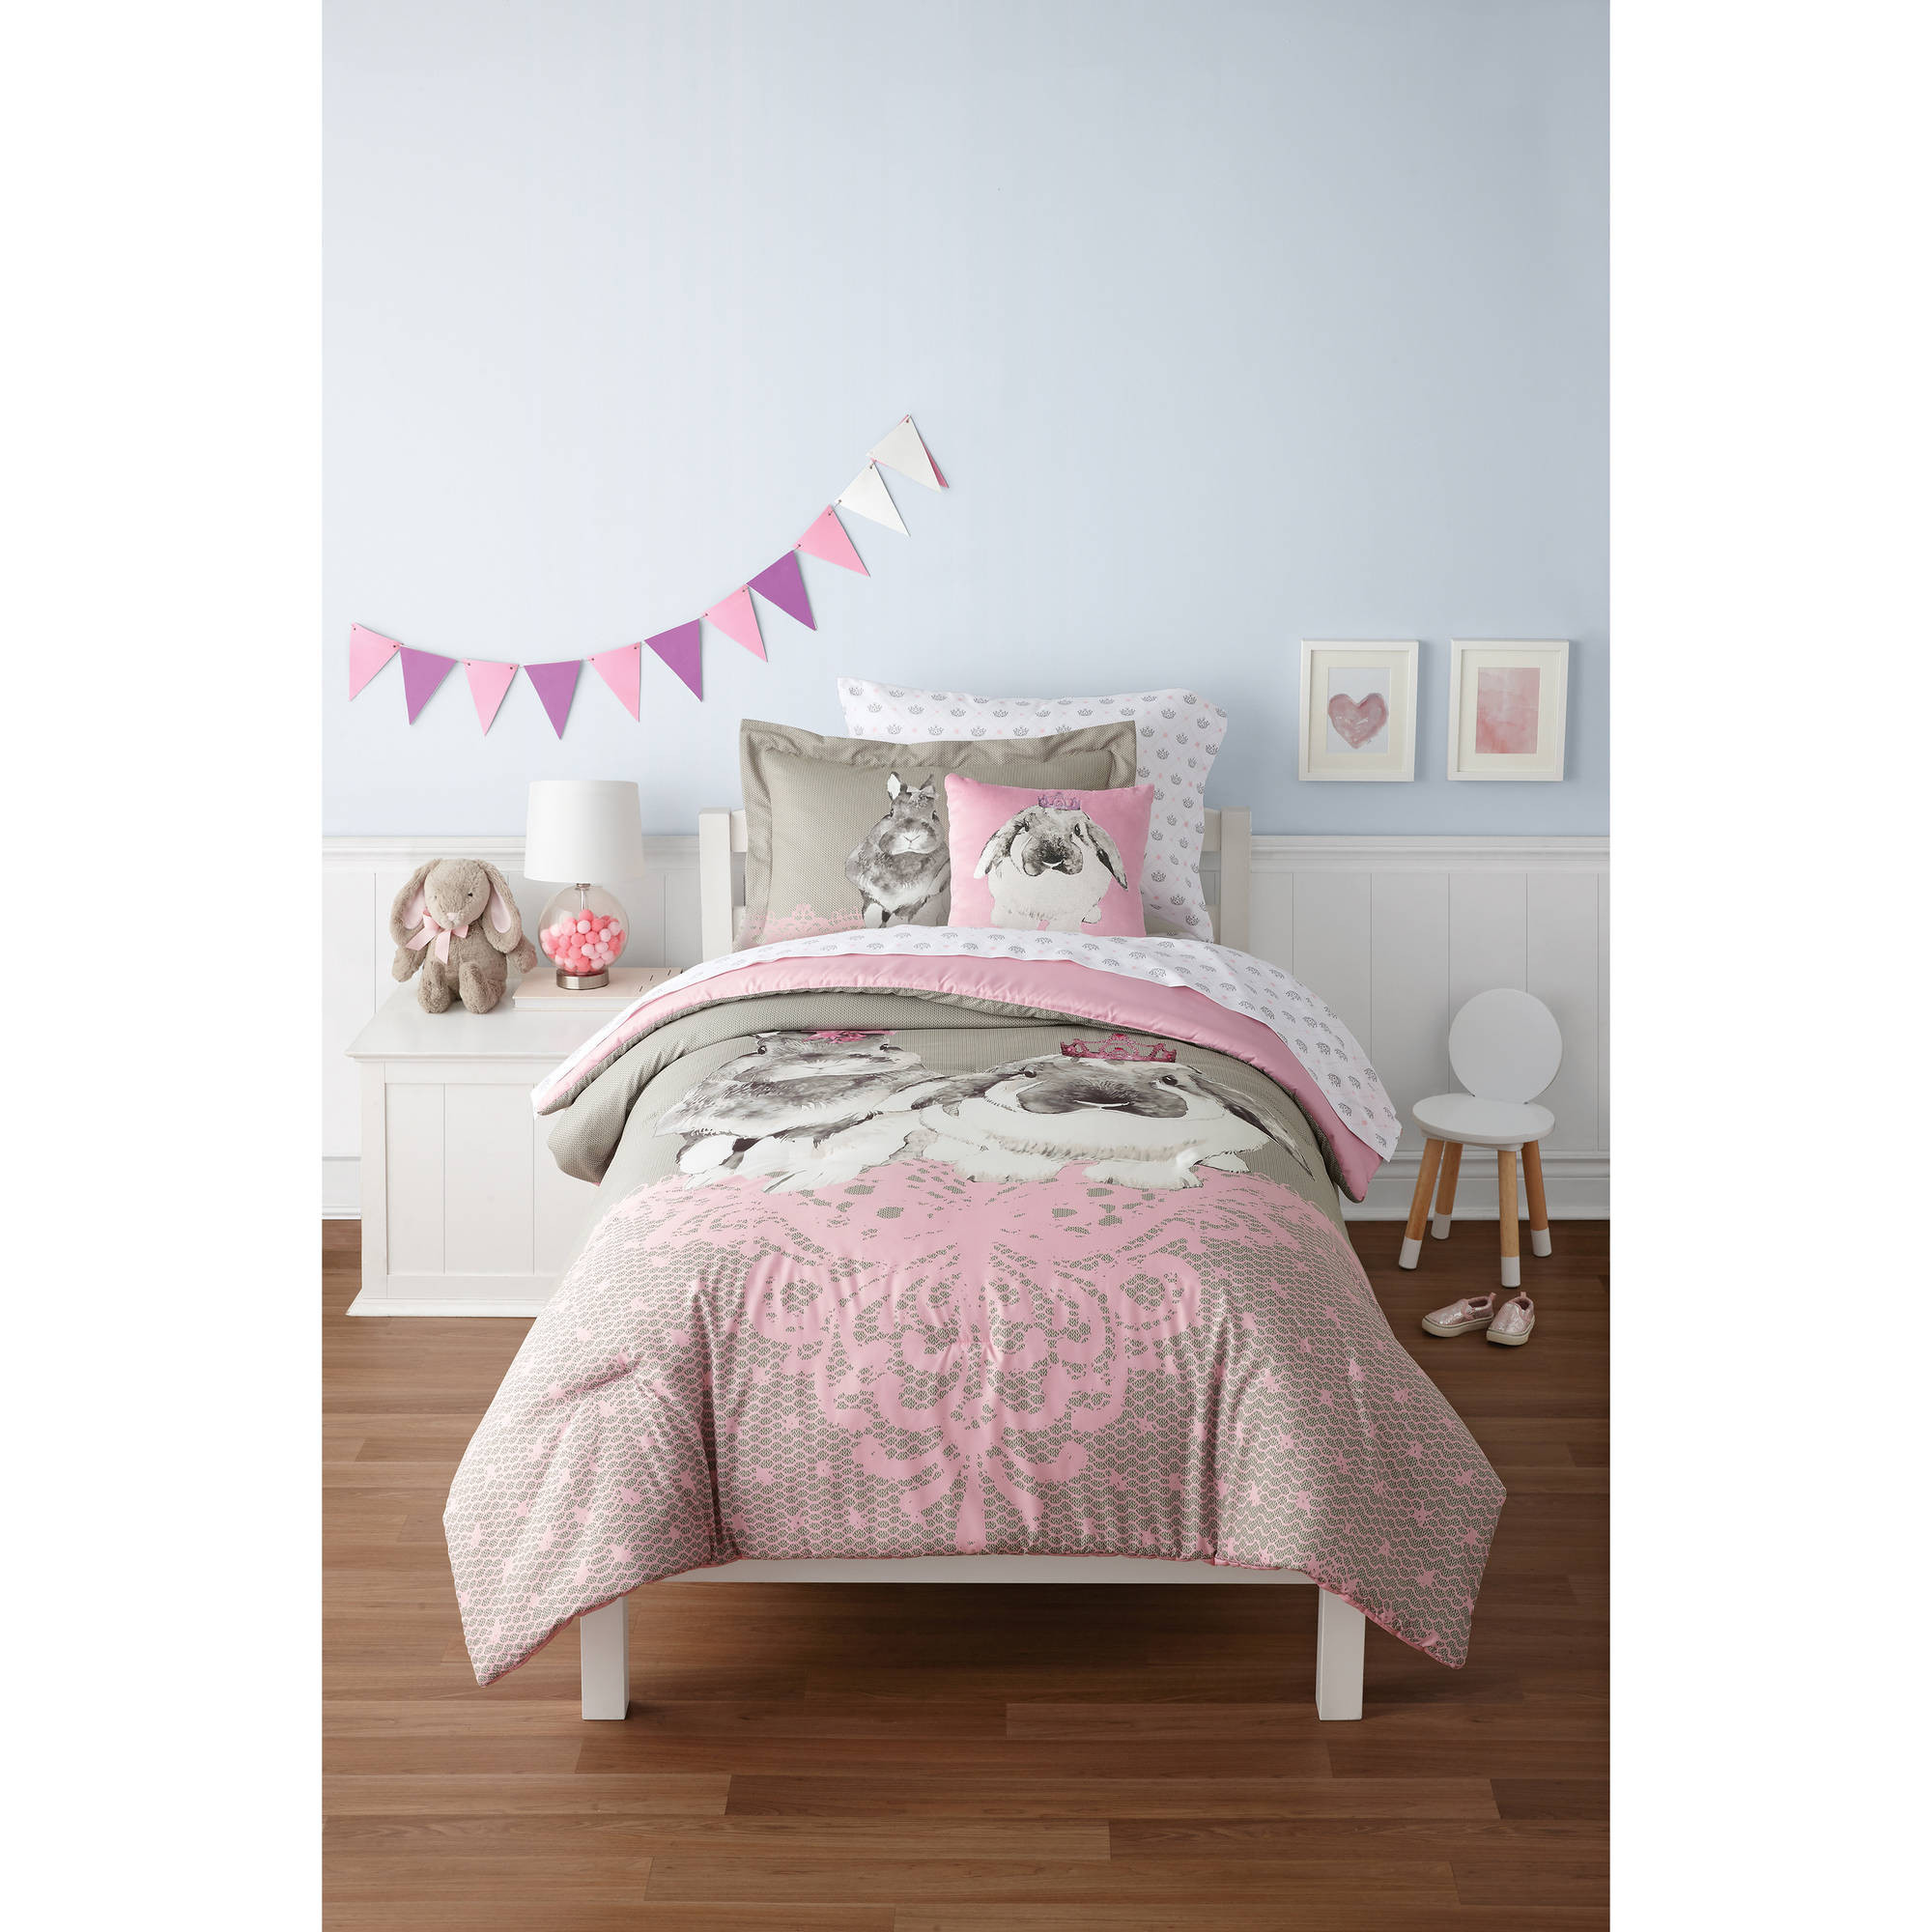 Walmart Bedroom Sets For Kids
 Mainstays Kids Pink Princess Bunnies Full Bed in a Bag